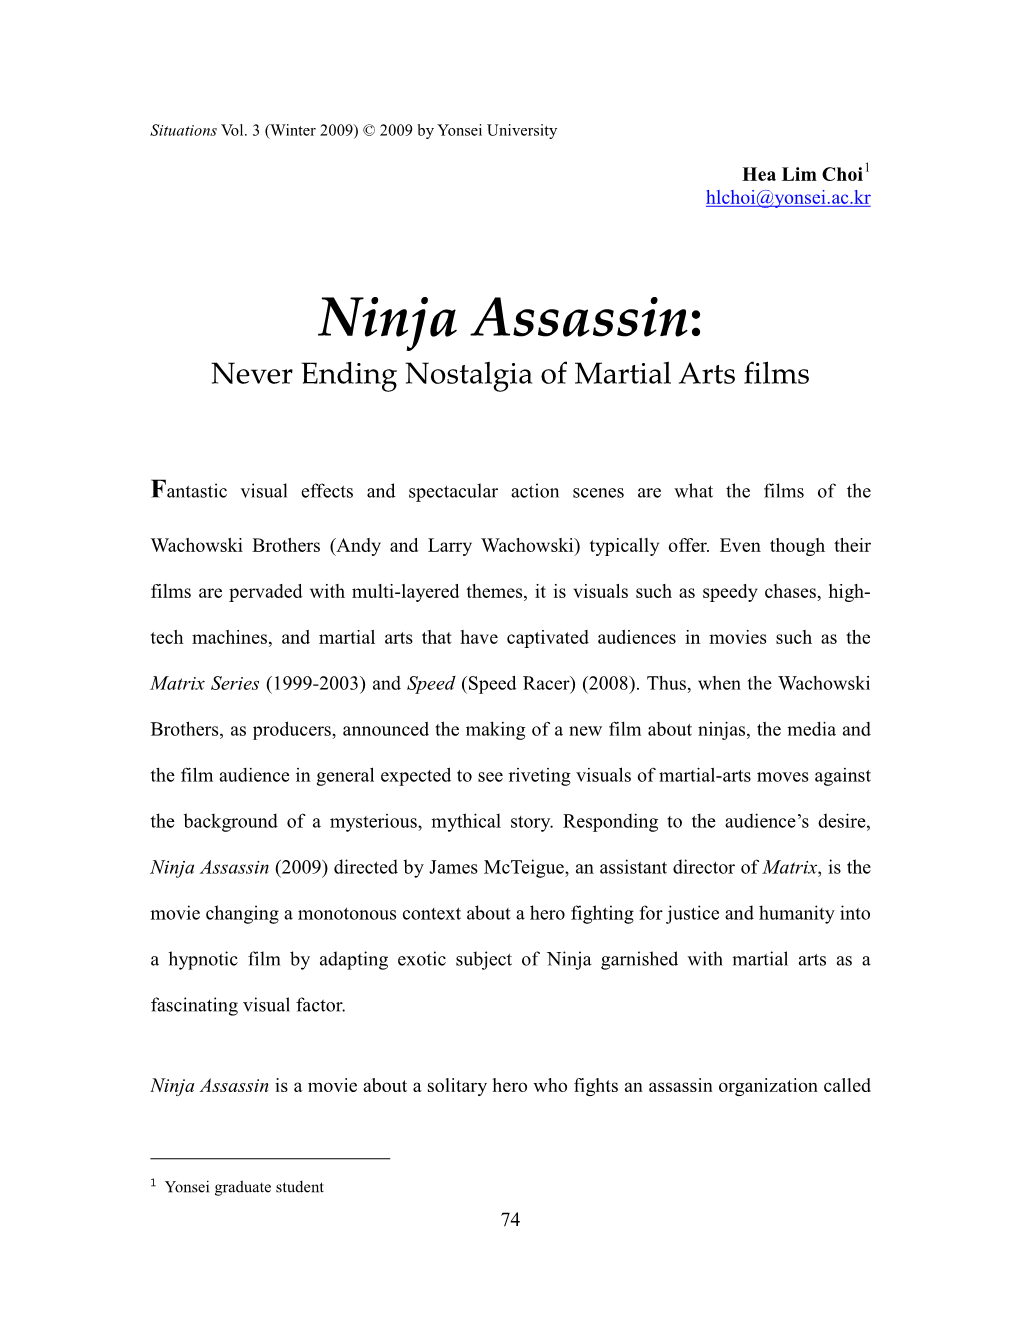 Ninja Assassin: Never Ending Nostalgia of Martial Arts Films